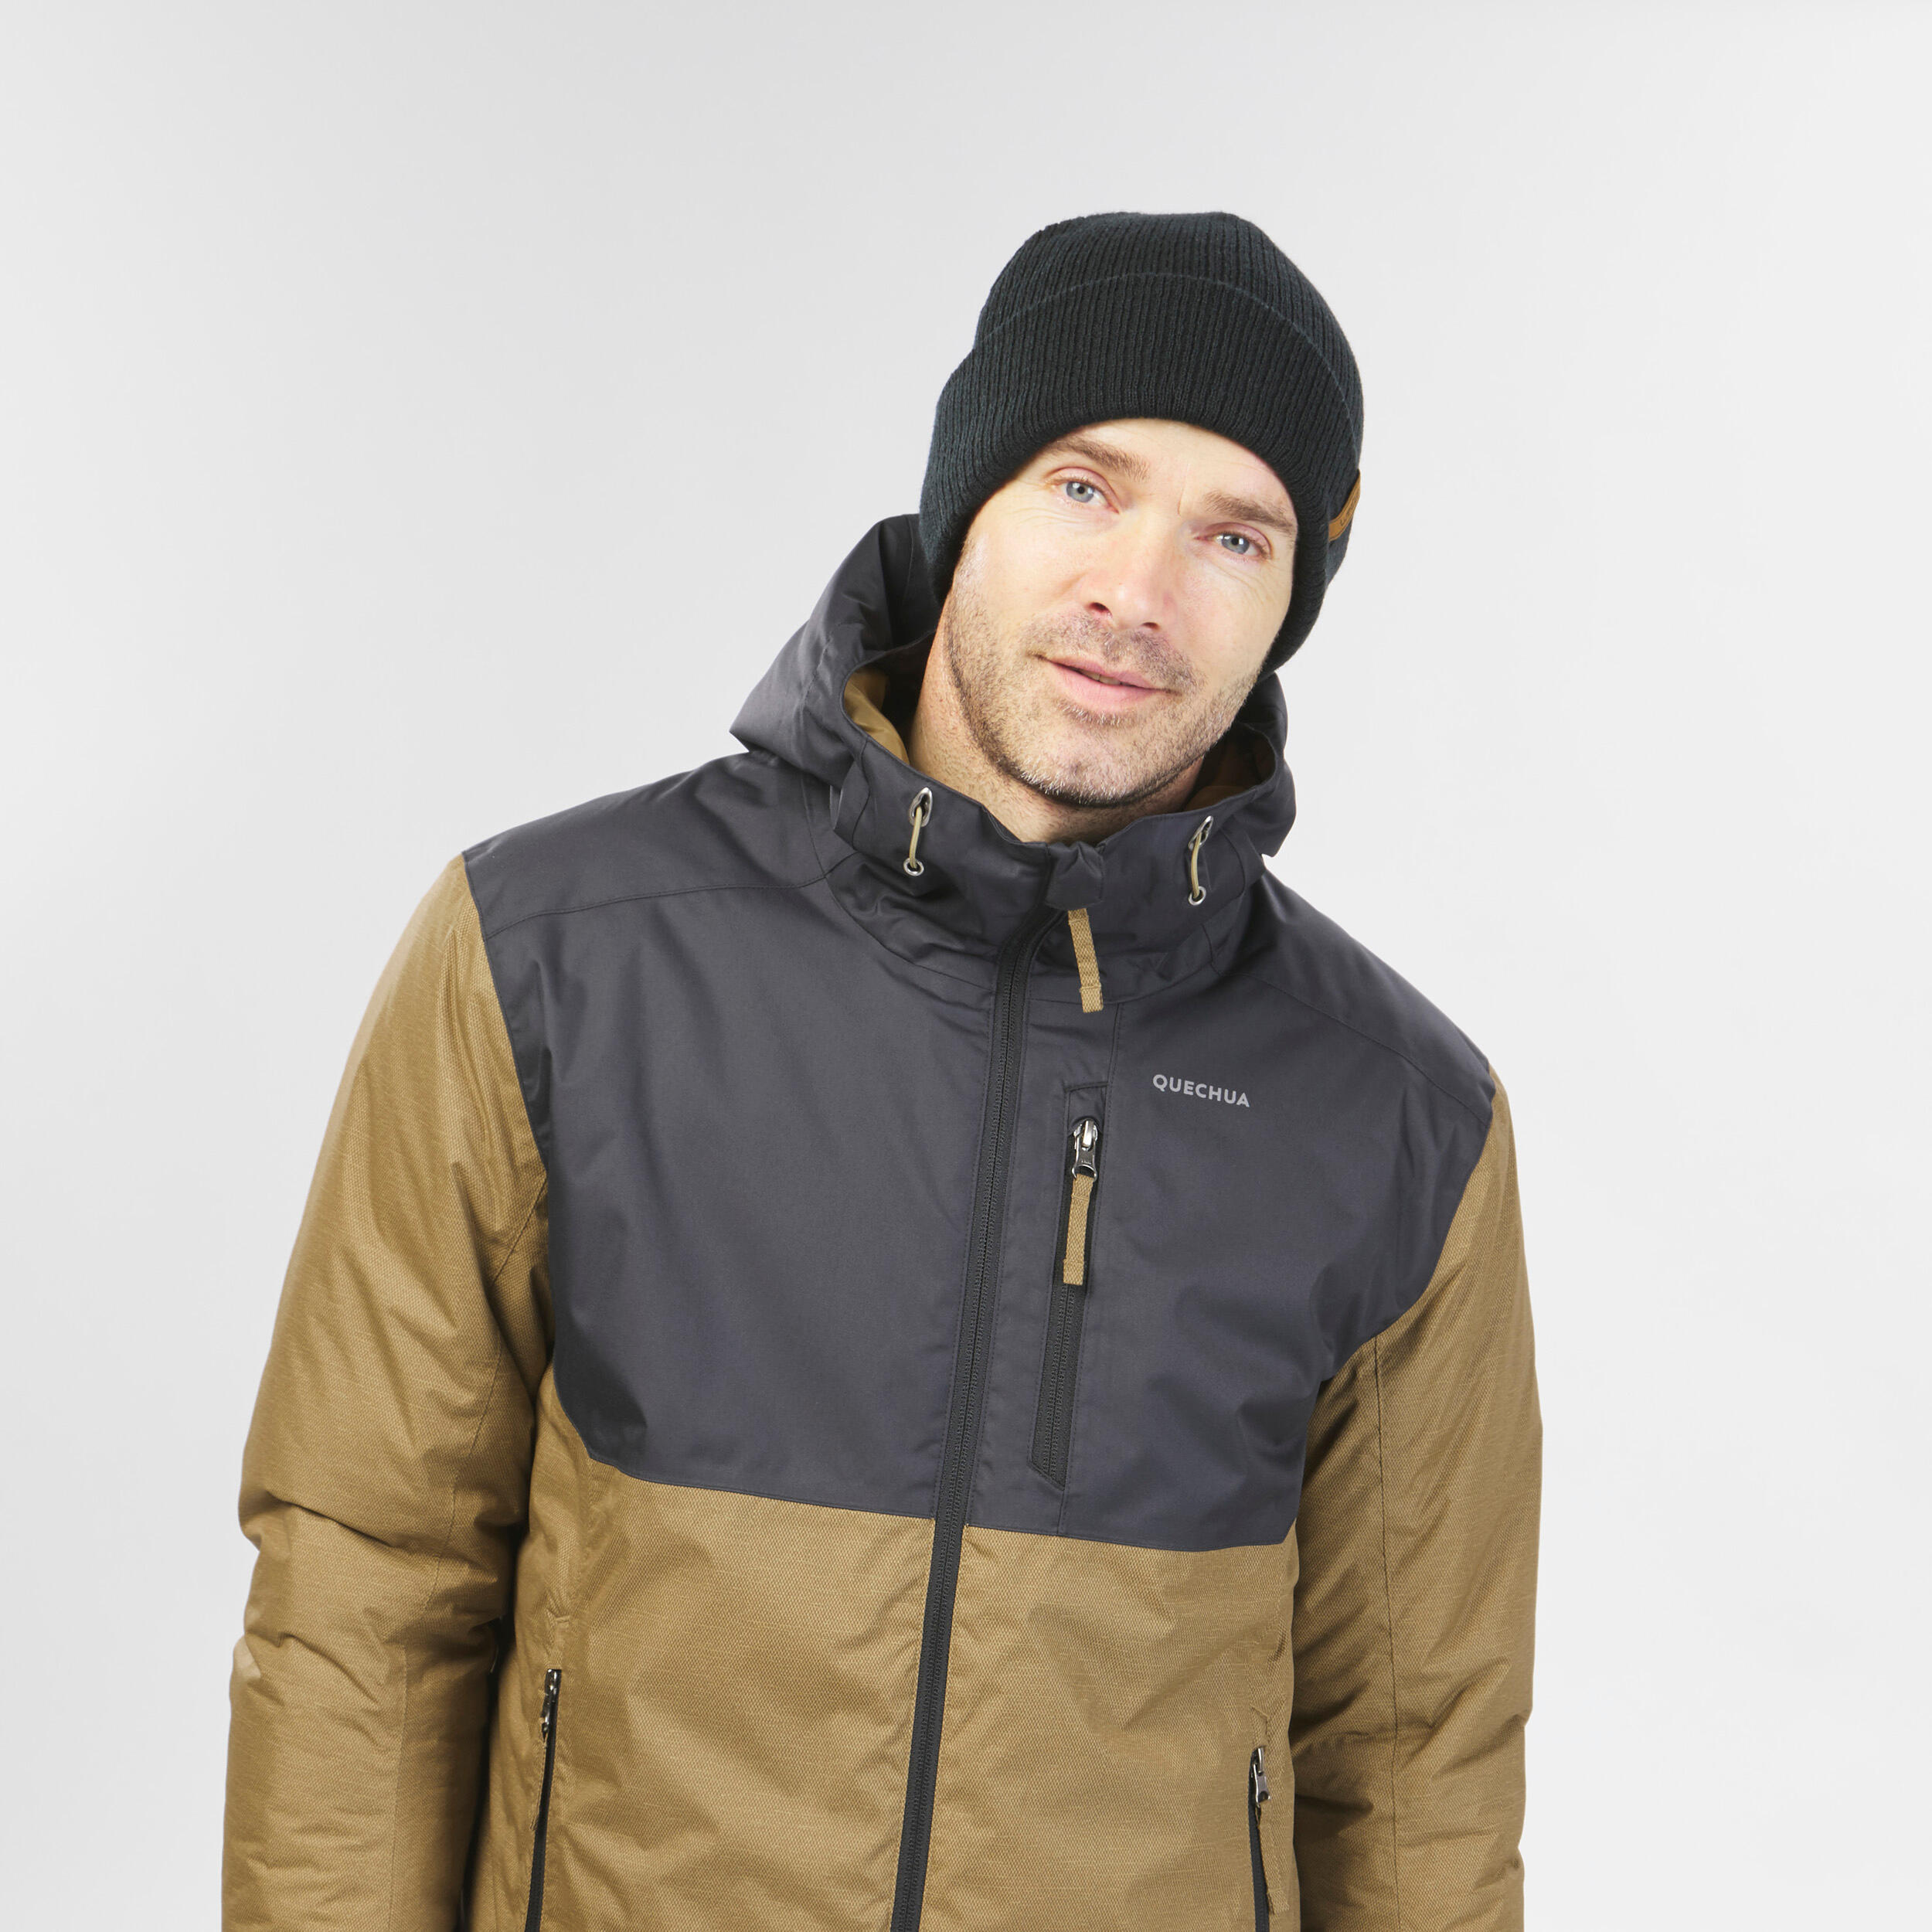 Men’s hiking waterproof winter jacket - SH500 -10°C 8/22